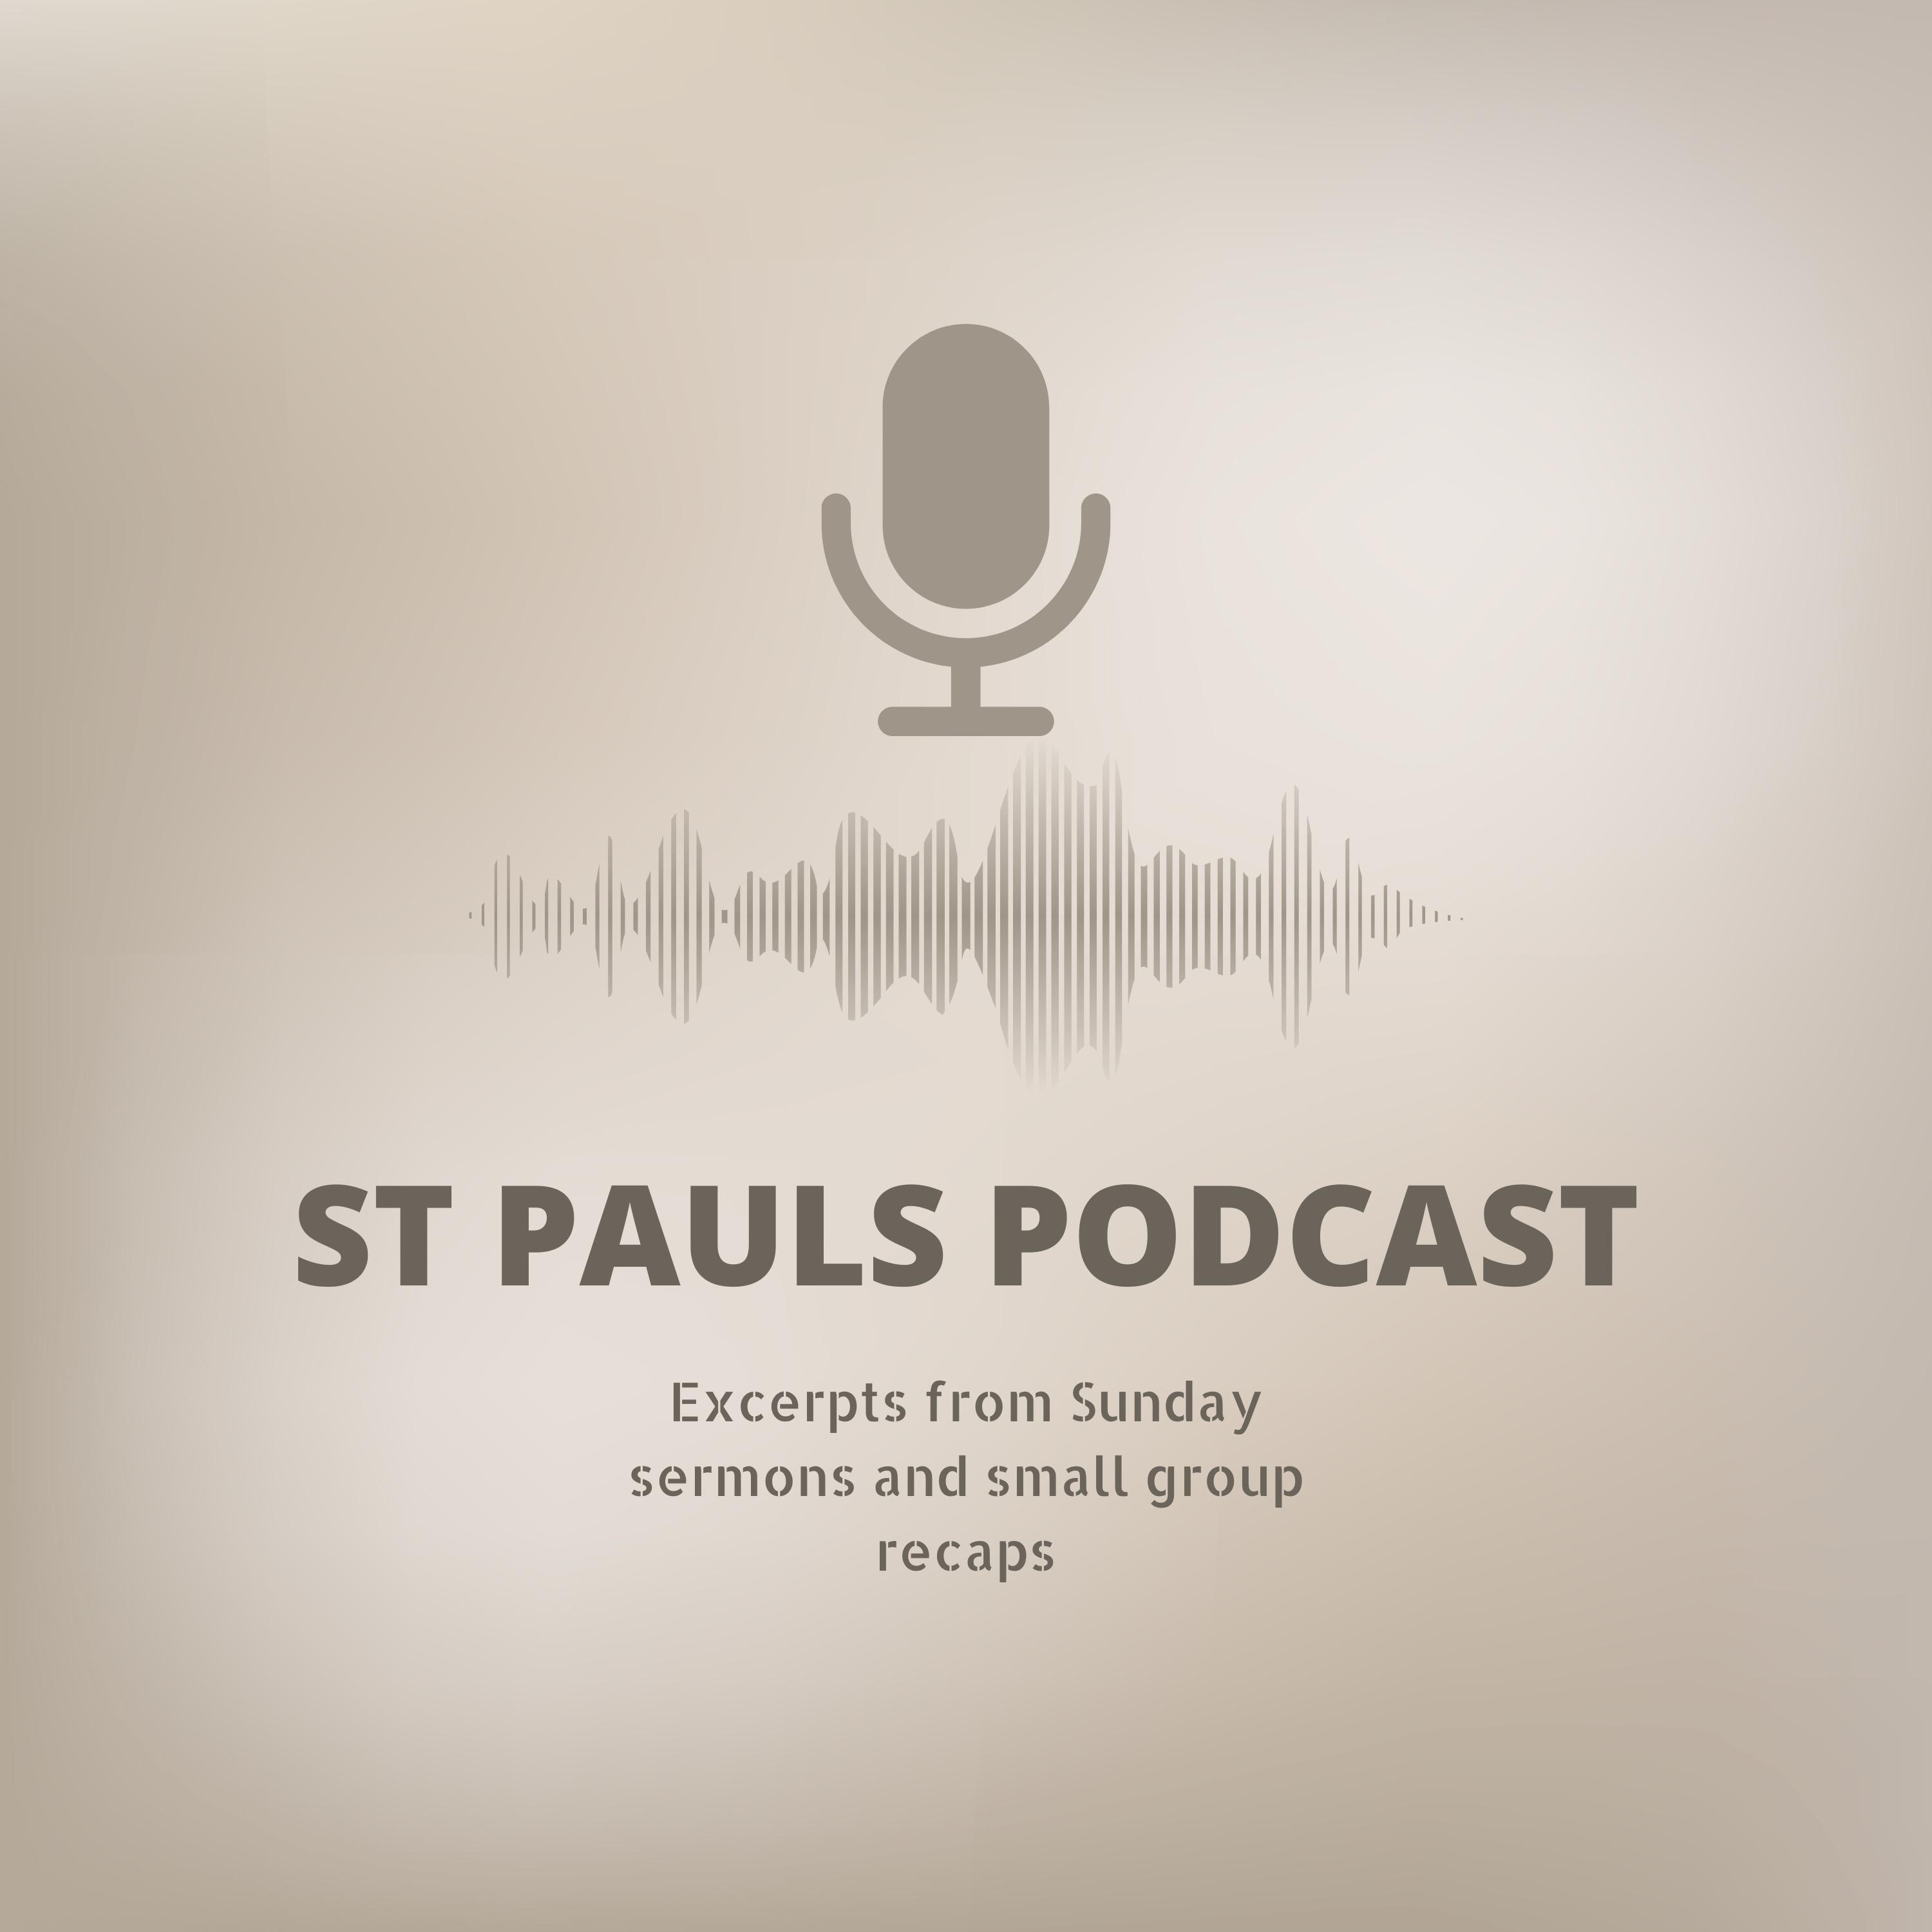 St. Paul's Podcast